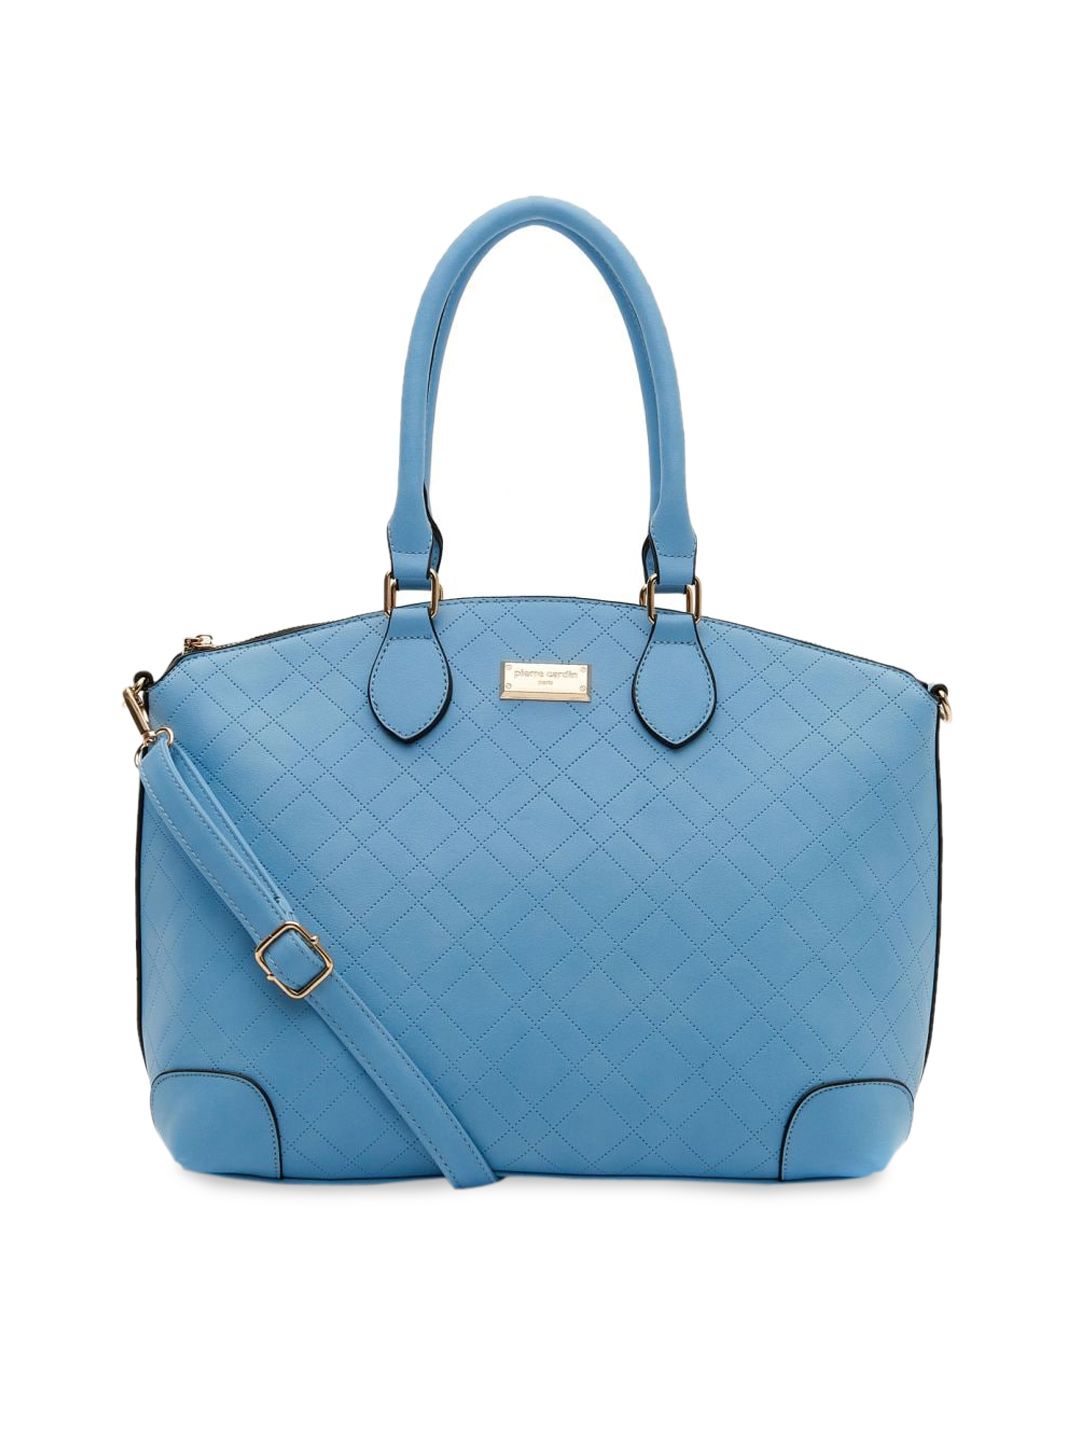 pierre cardin Blue Textured Handheld Bag Price in India